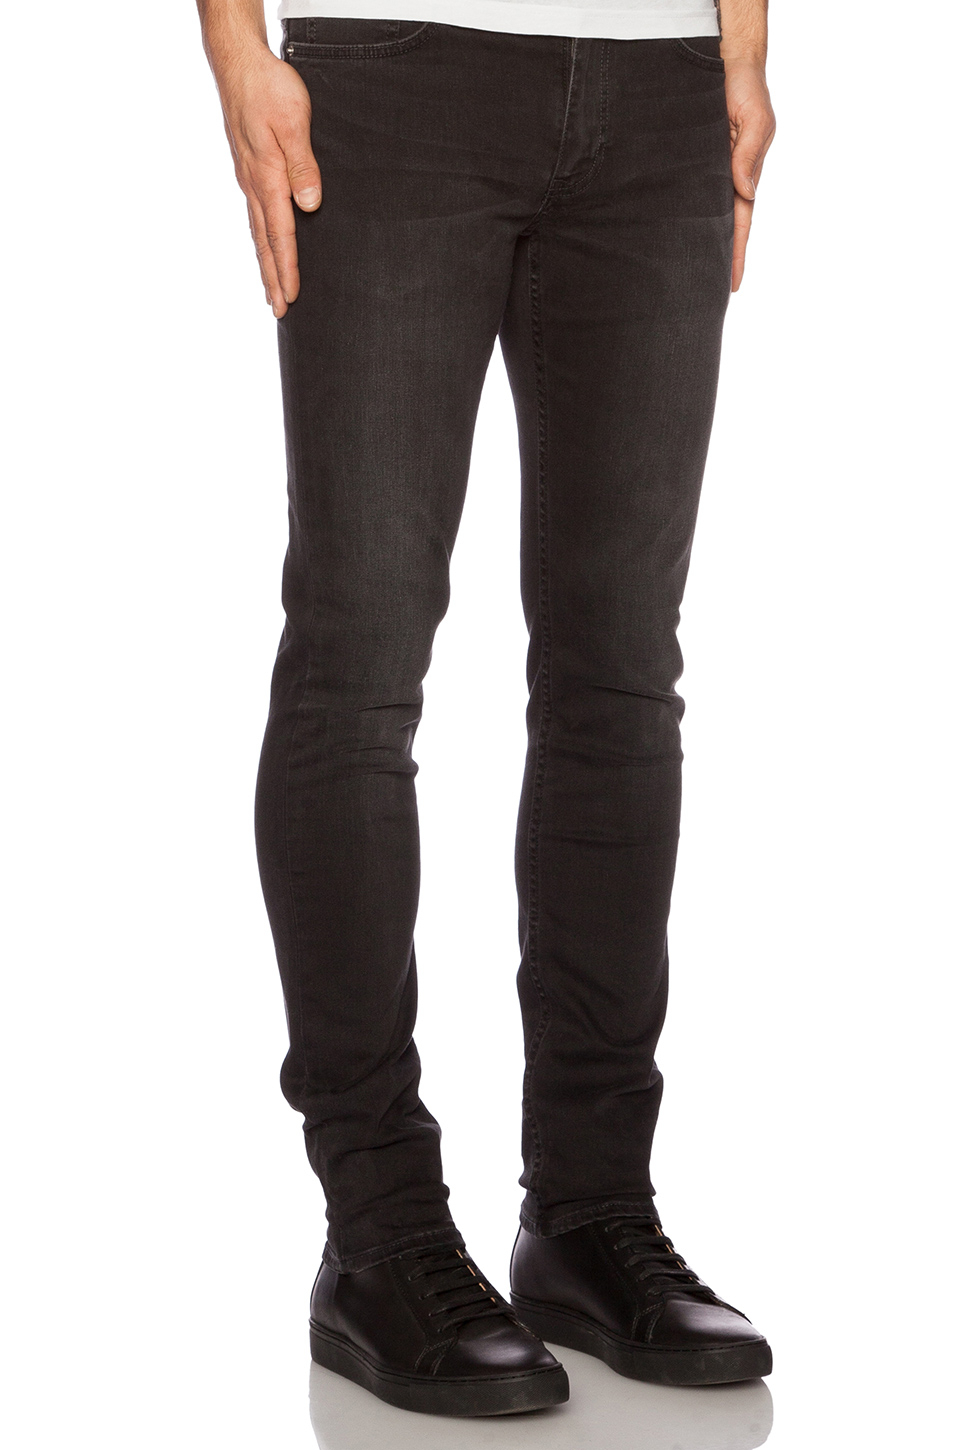 Lyst - Blk dnm Jeans 25 in Black for Men